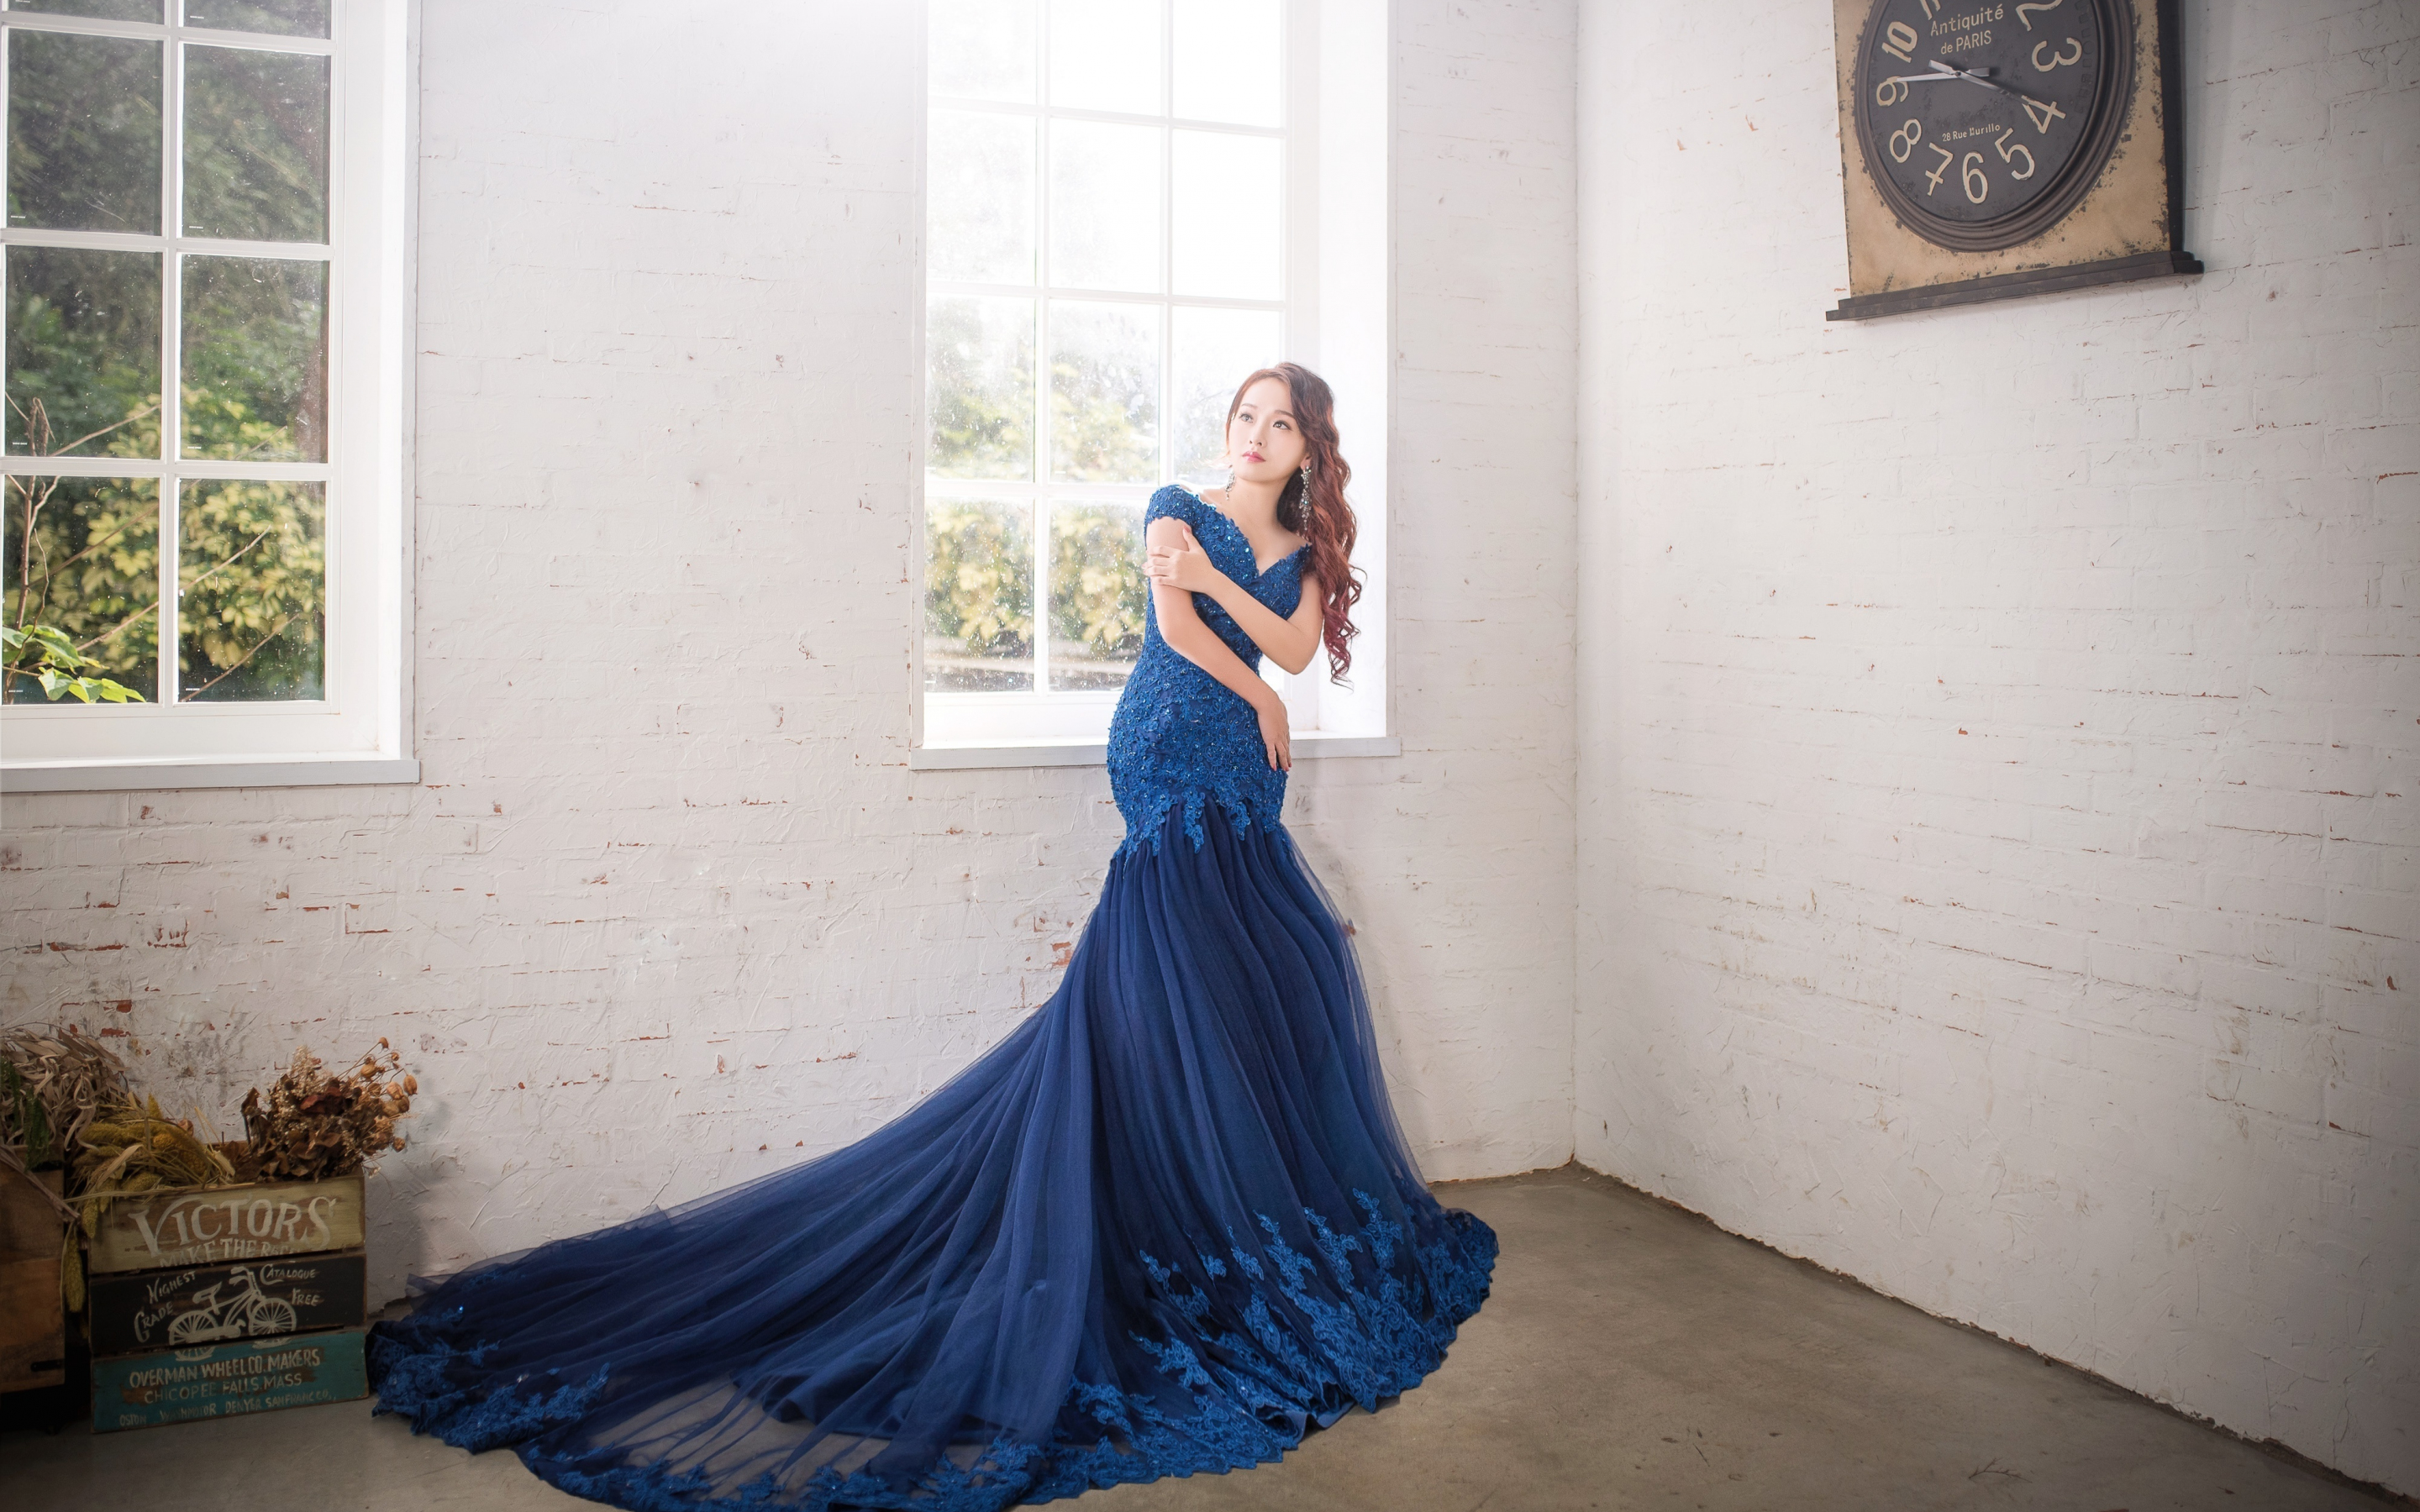 Asian woman, girl, model, blue dress, 2880x1800 wallpaper